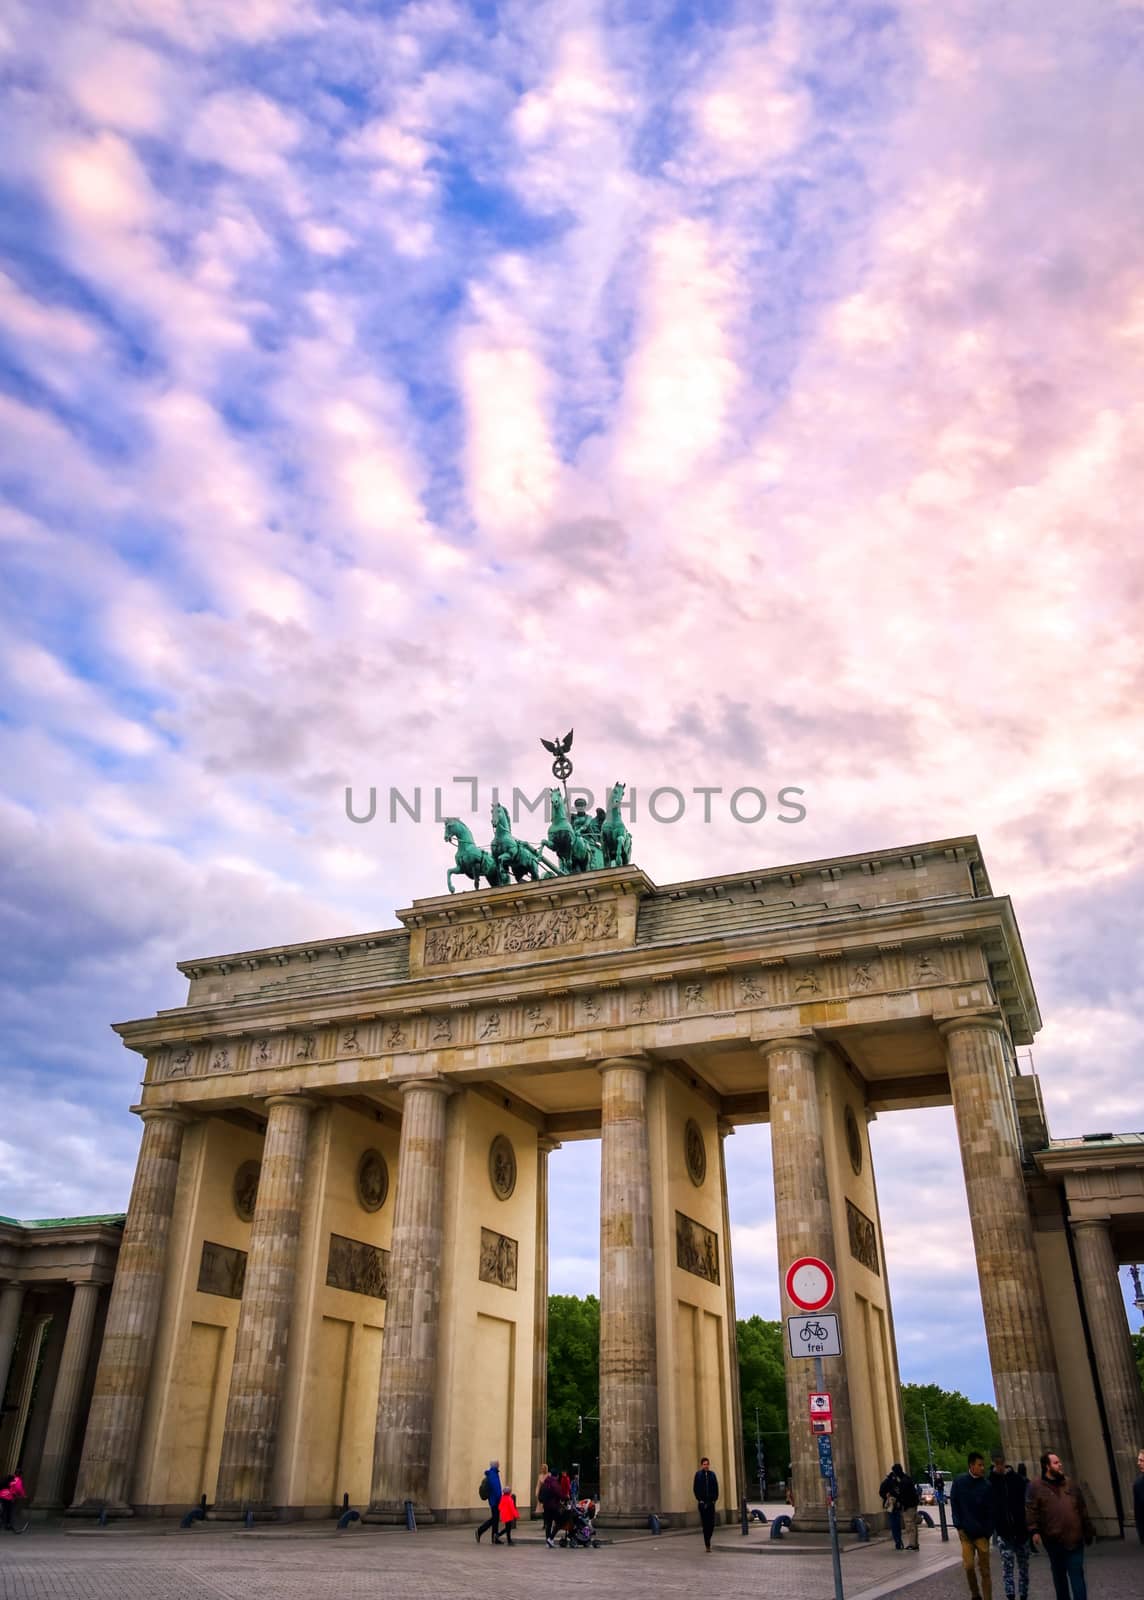 Brandenburg Gate in Berlin, Germany by jbyard22